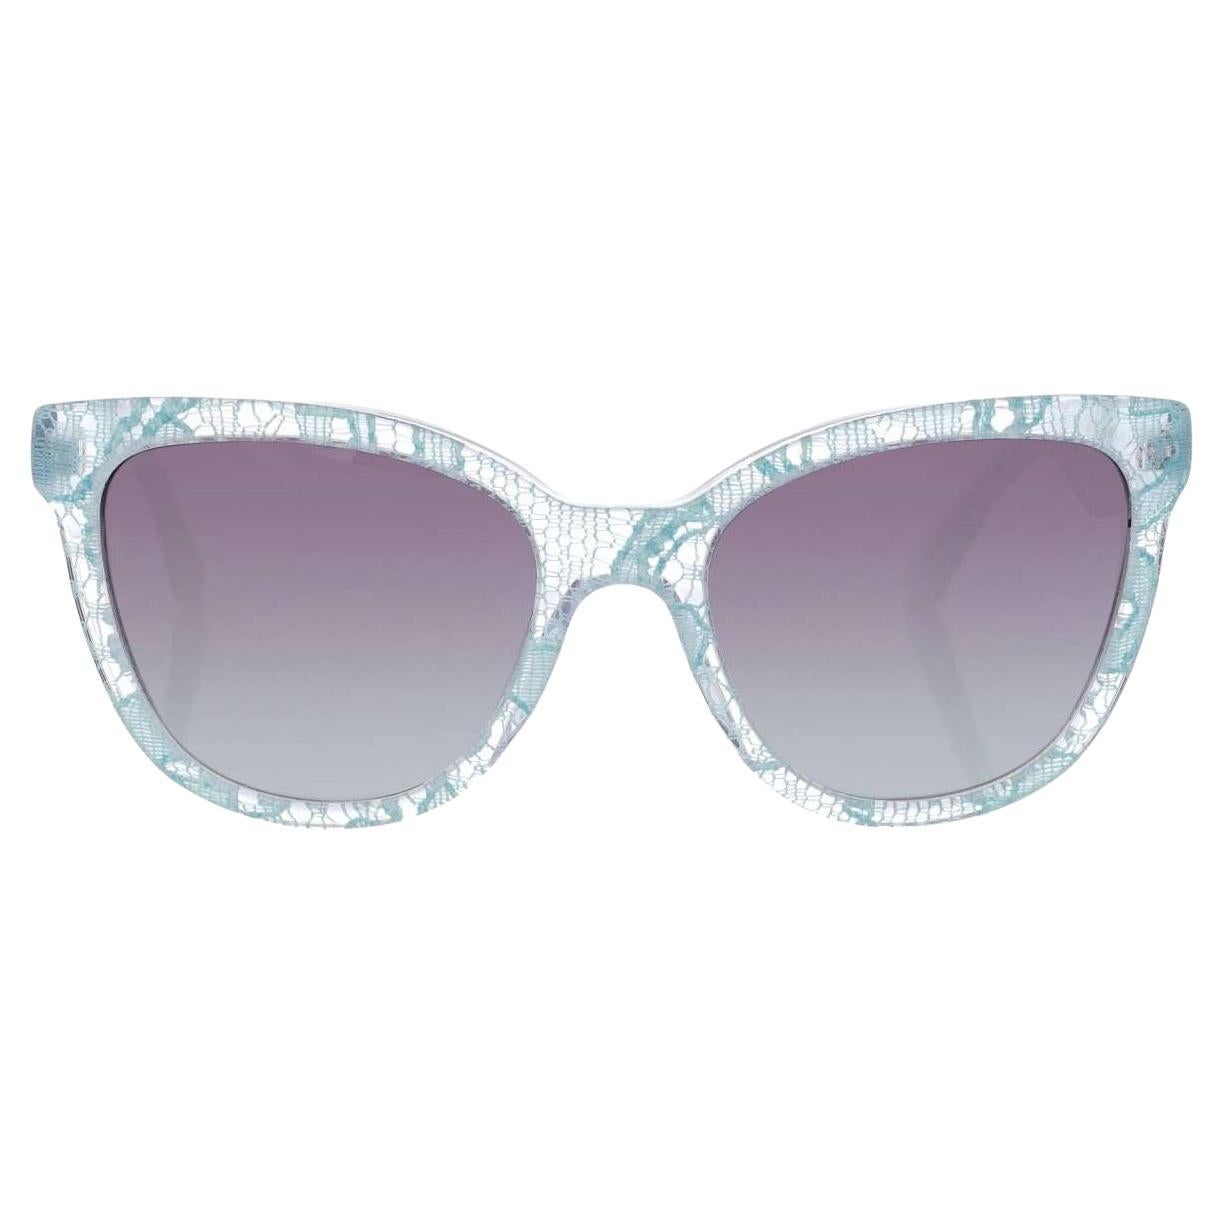 Dolce & Gabbana - Taormina Lace Sunglasses DG 4190 Gray Blue